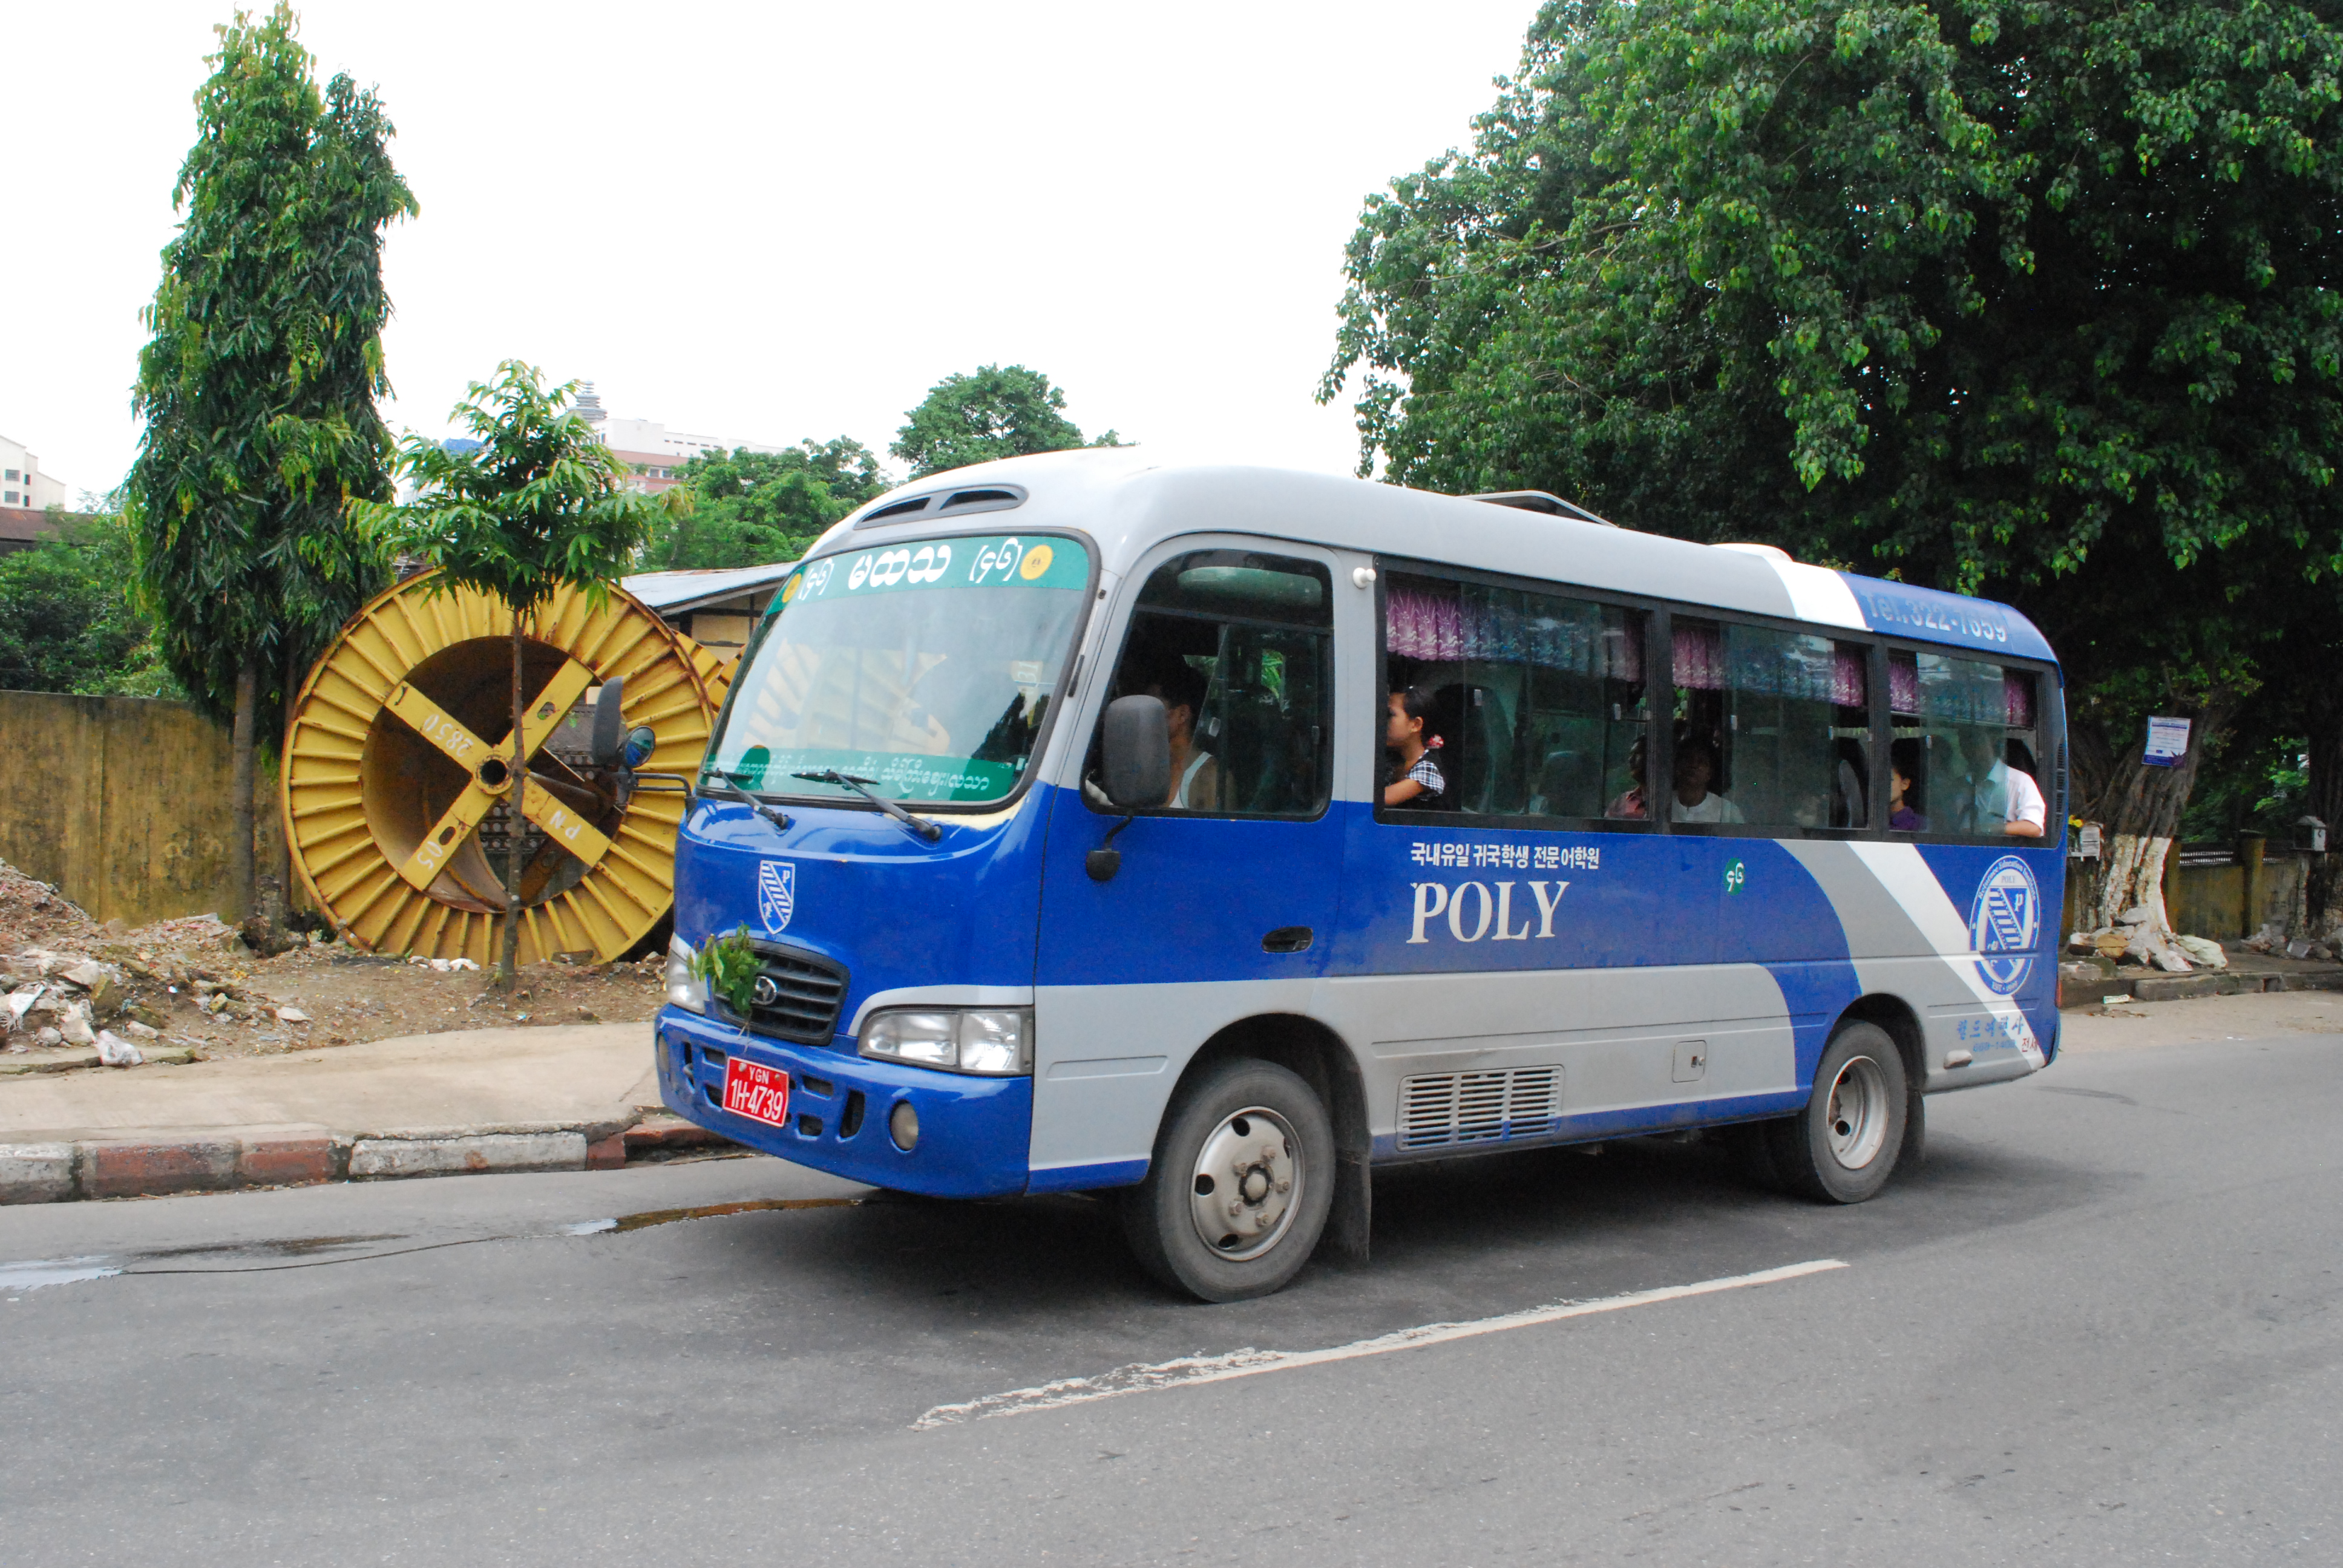 Bus passengers injured in Hpa-an ambush